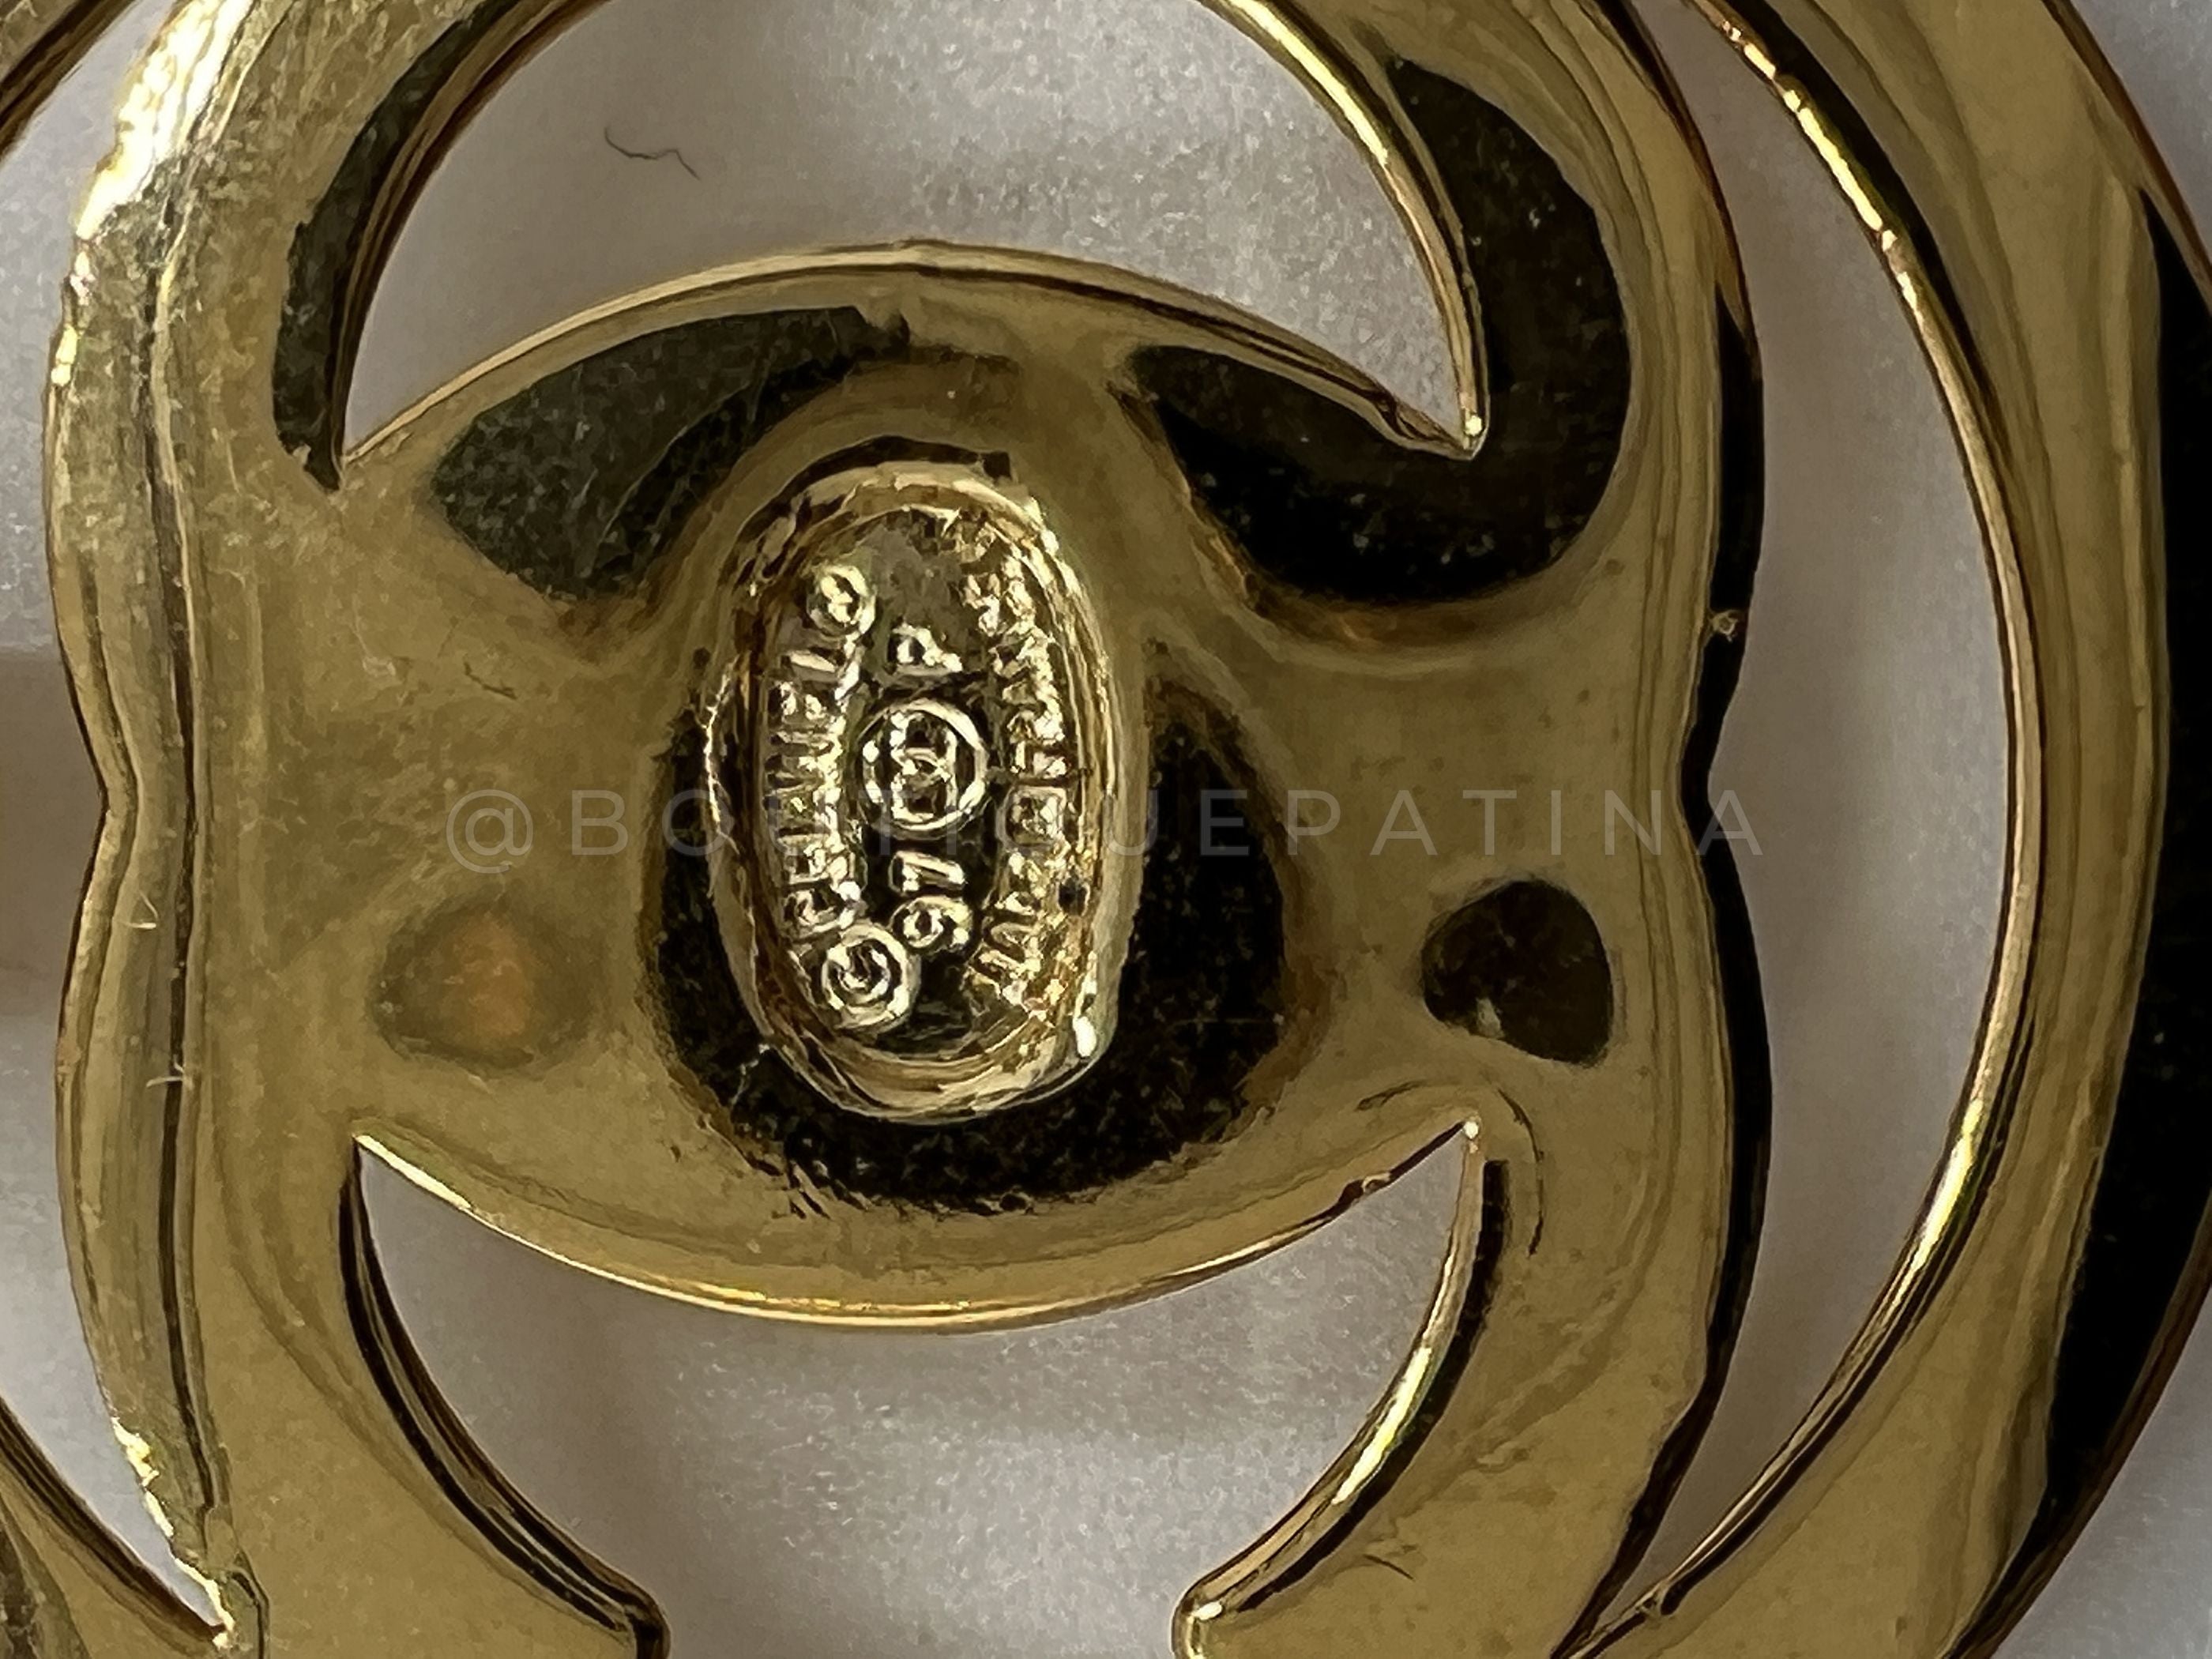 Chanel Vintage 97P Large Encircled Turnlock Drop Earrings Gold